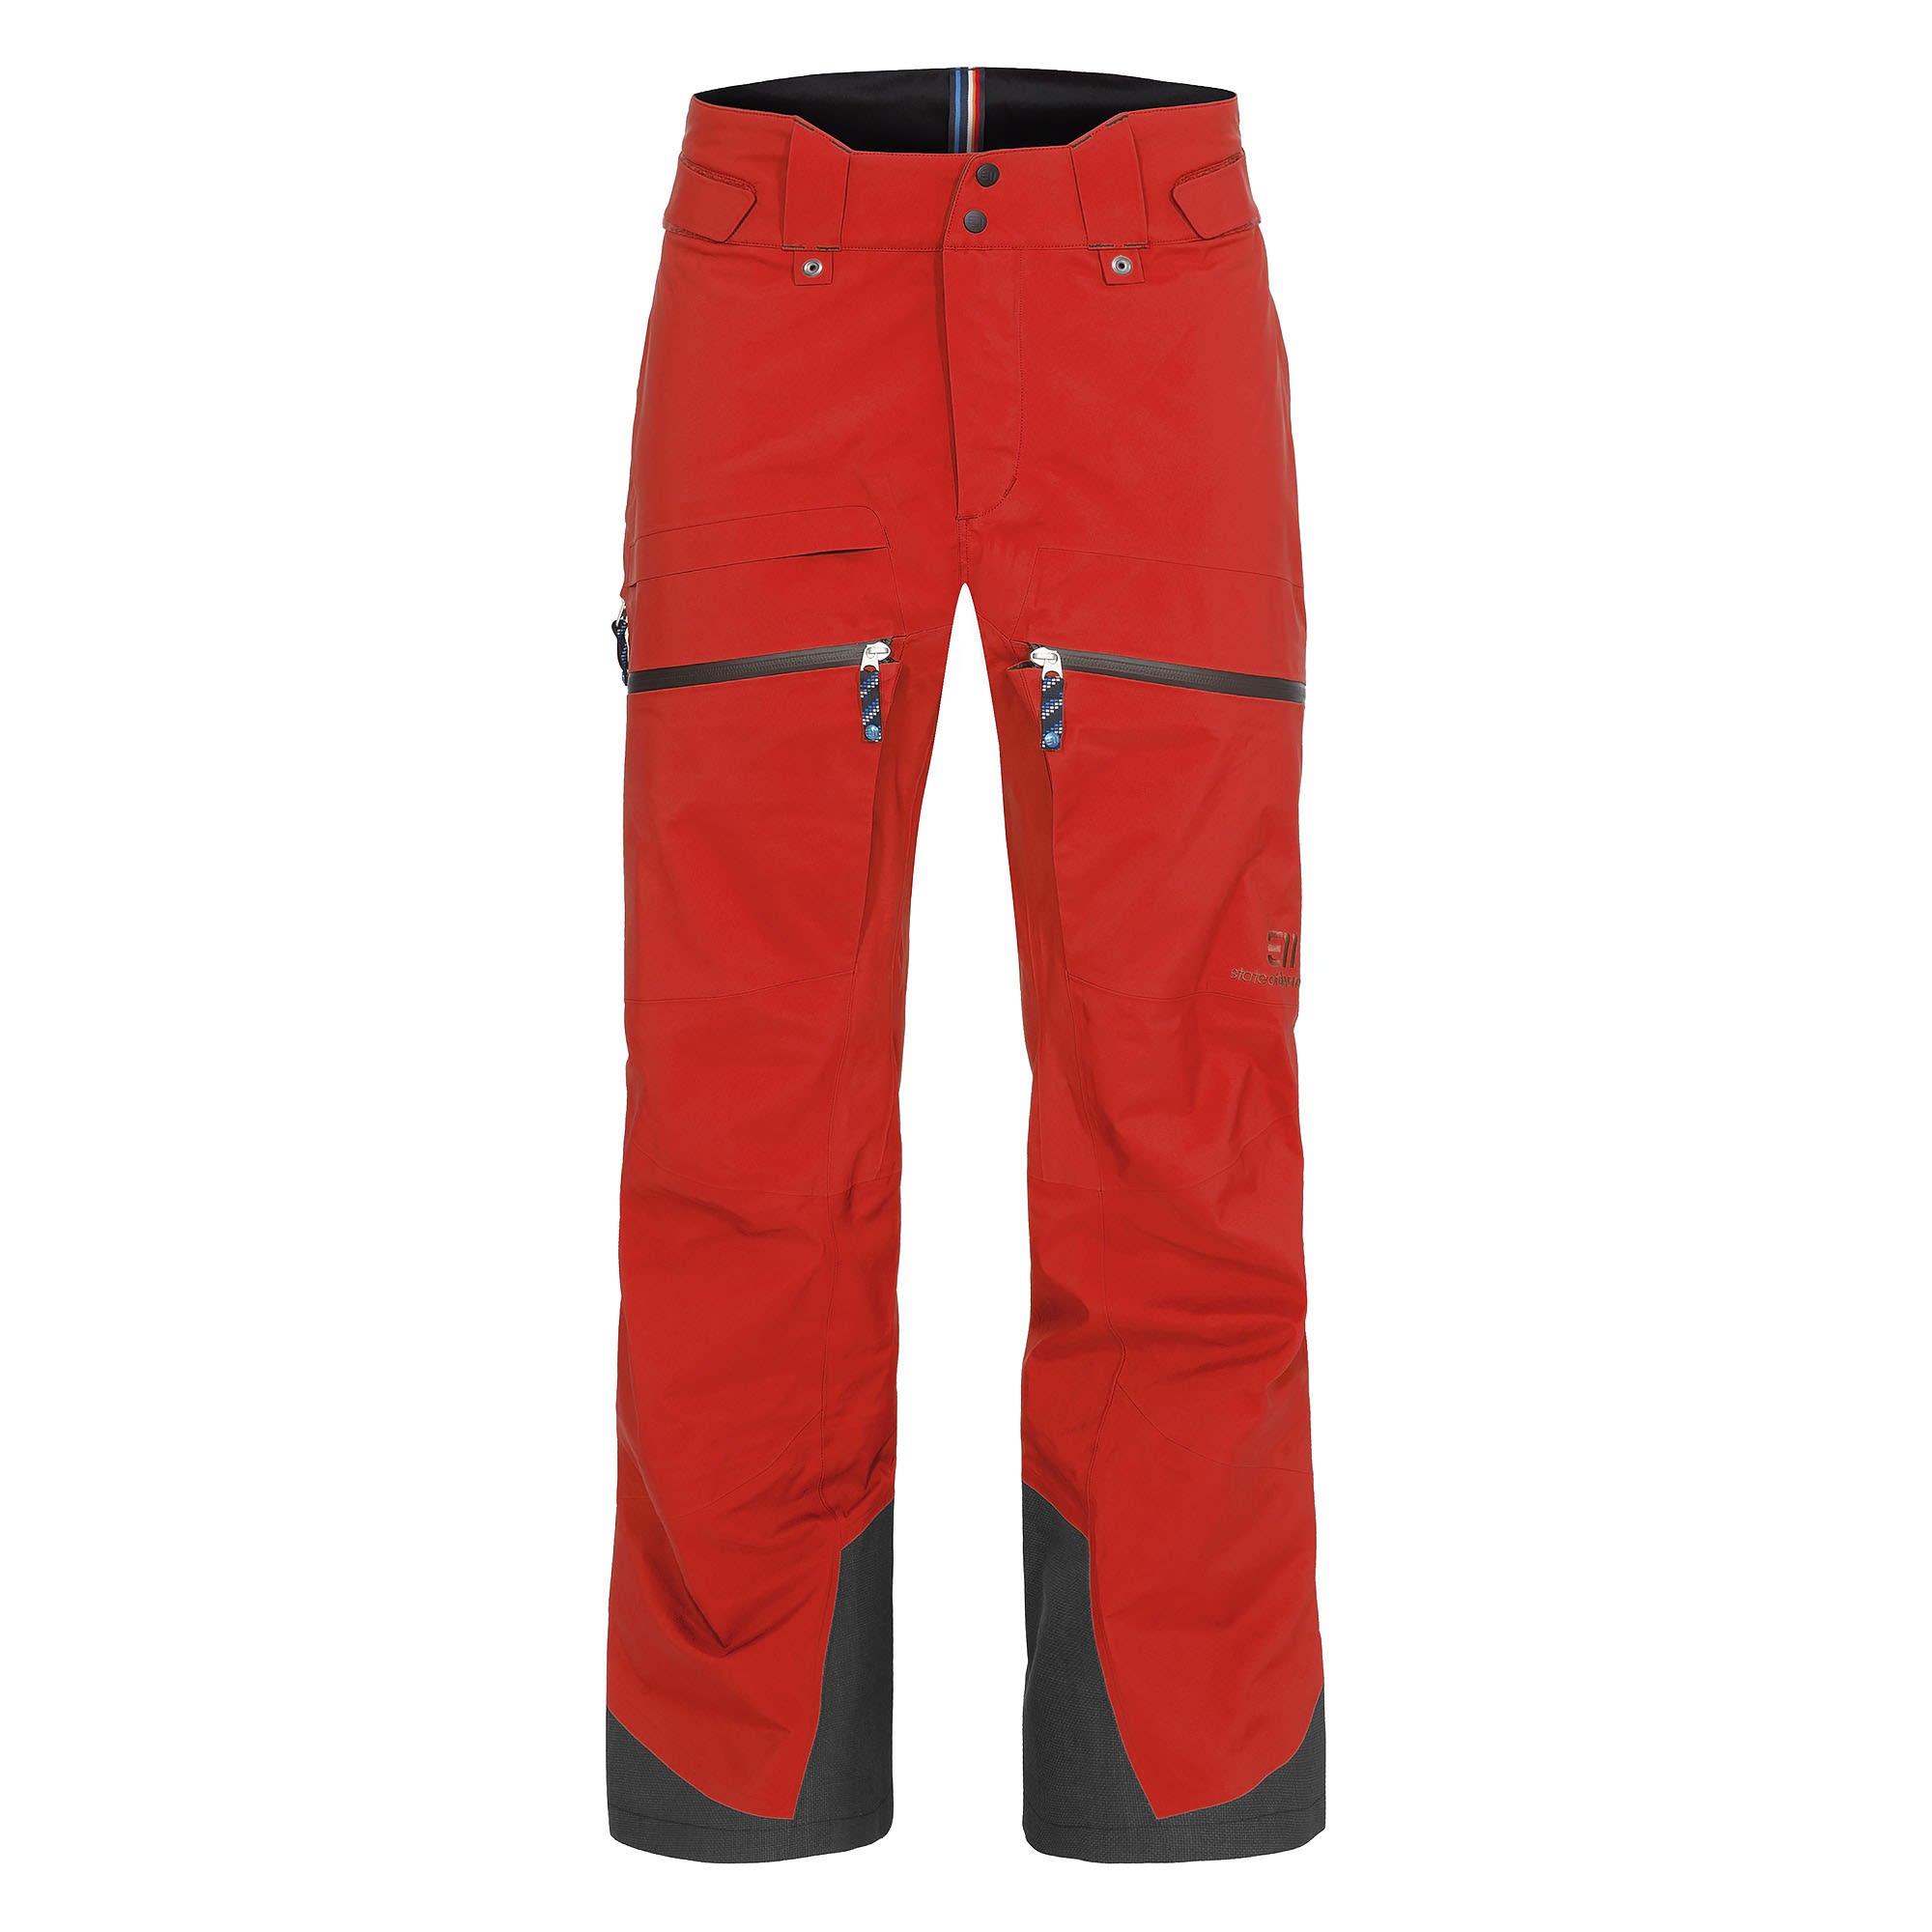 Elevenate Pure Pants Rot- Male Gore-Tex(R) Lange Hosen- Grsse XL - Farbe Red Glow